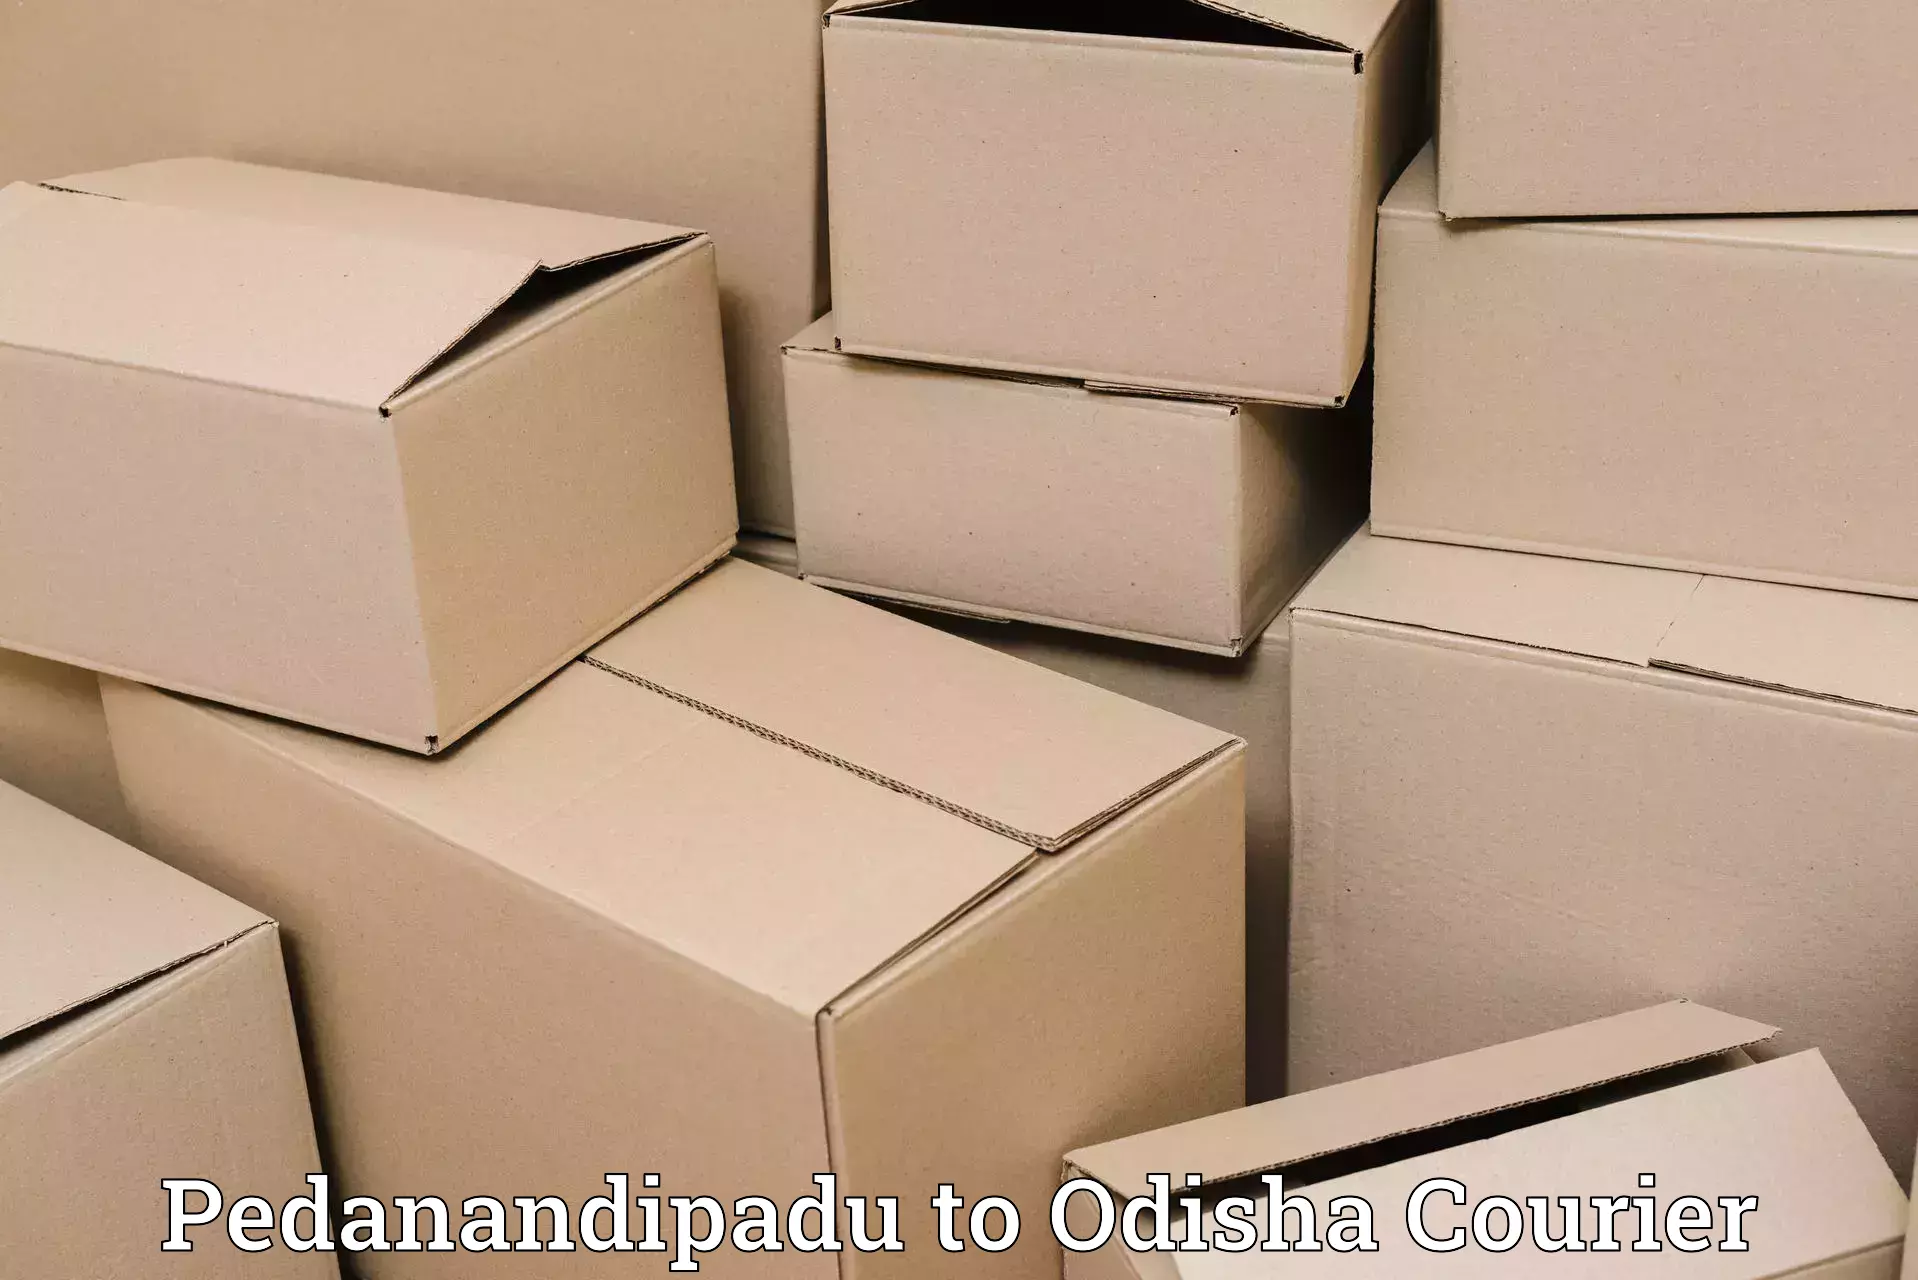 Express delivery capabilities Pedanandipadu to Koraput